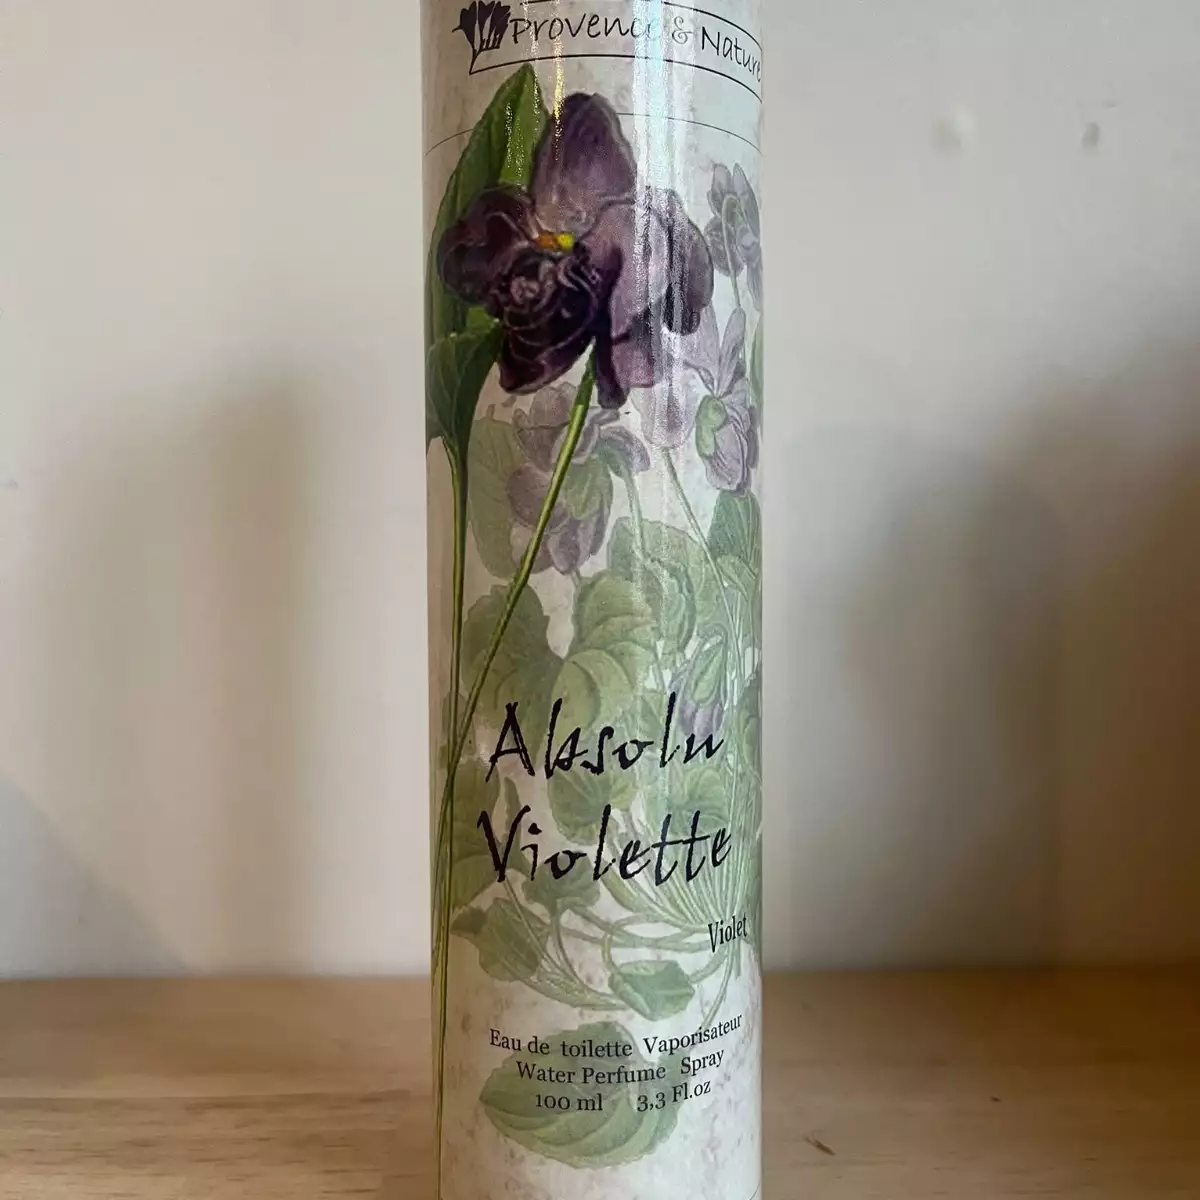 Absolu Violette- Provence et Nature